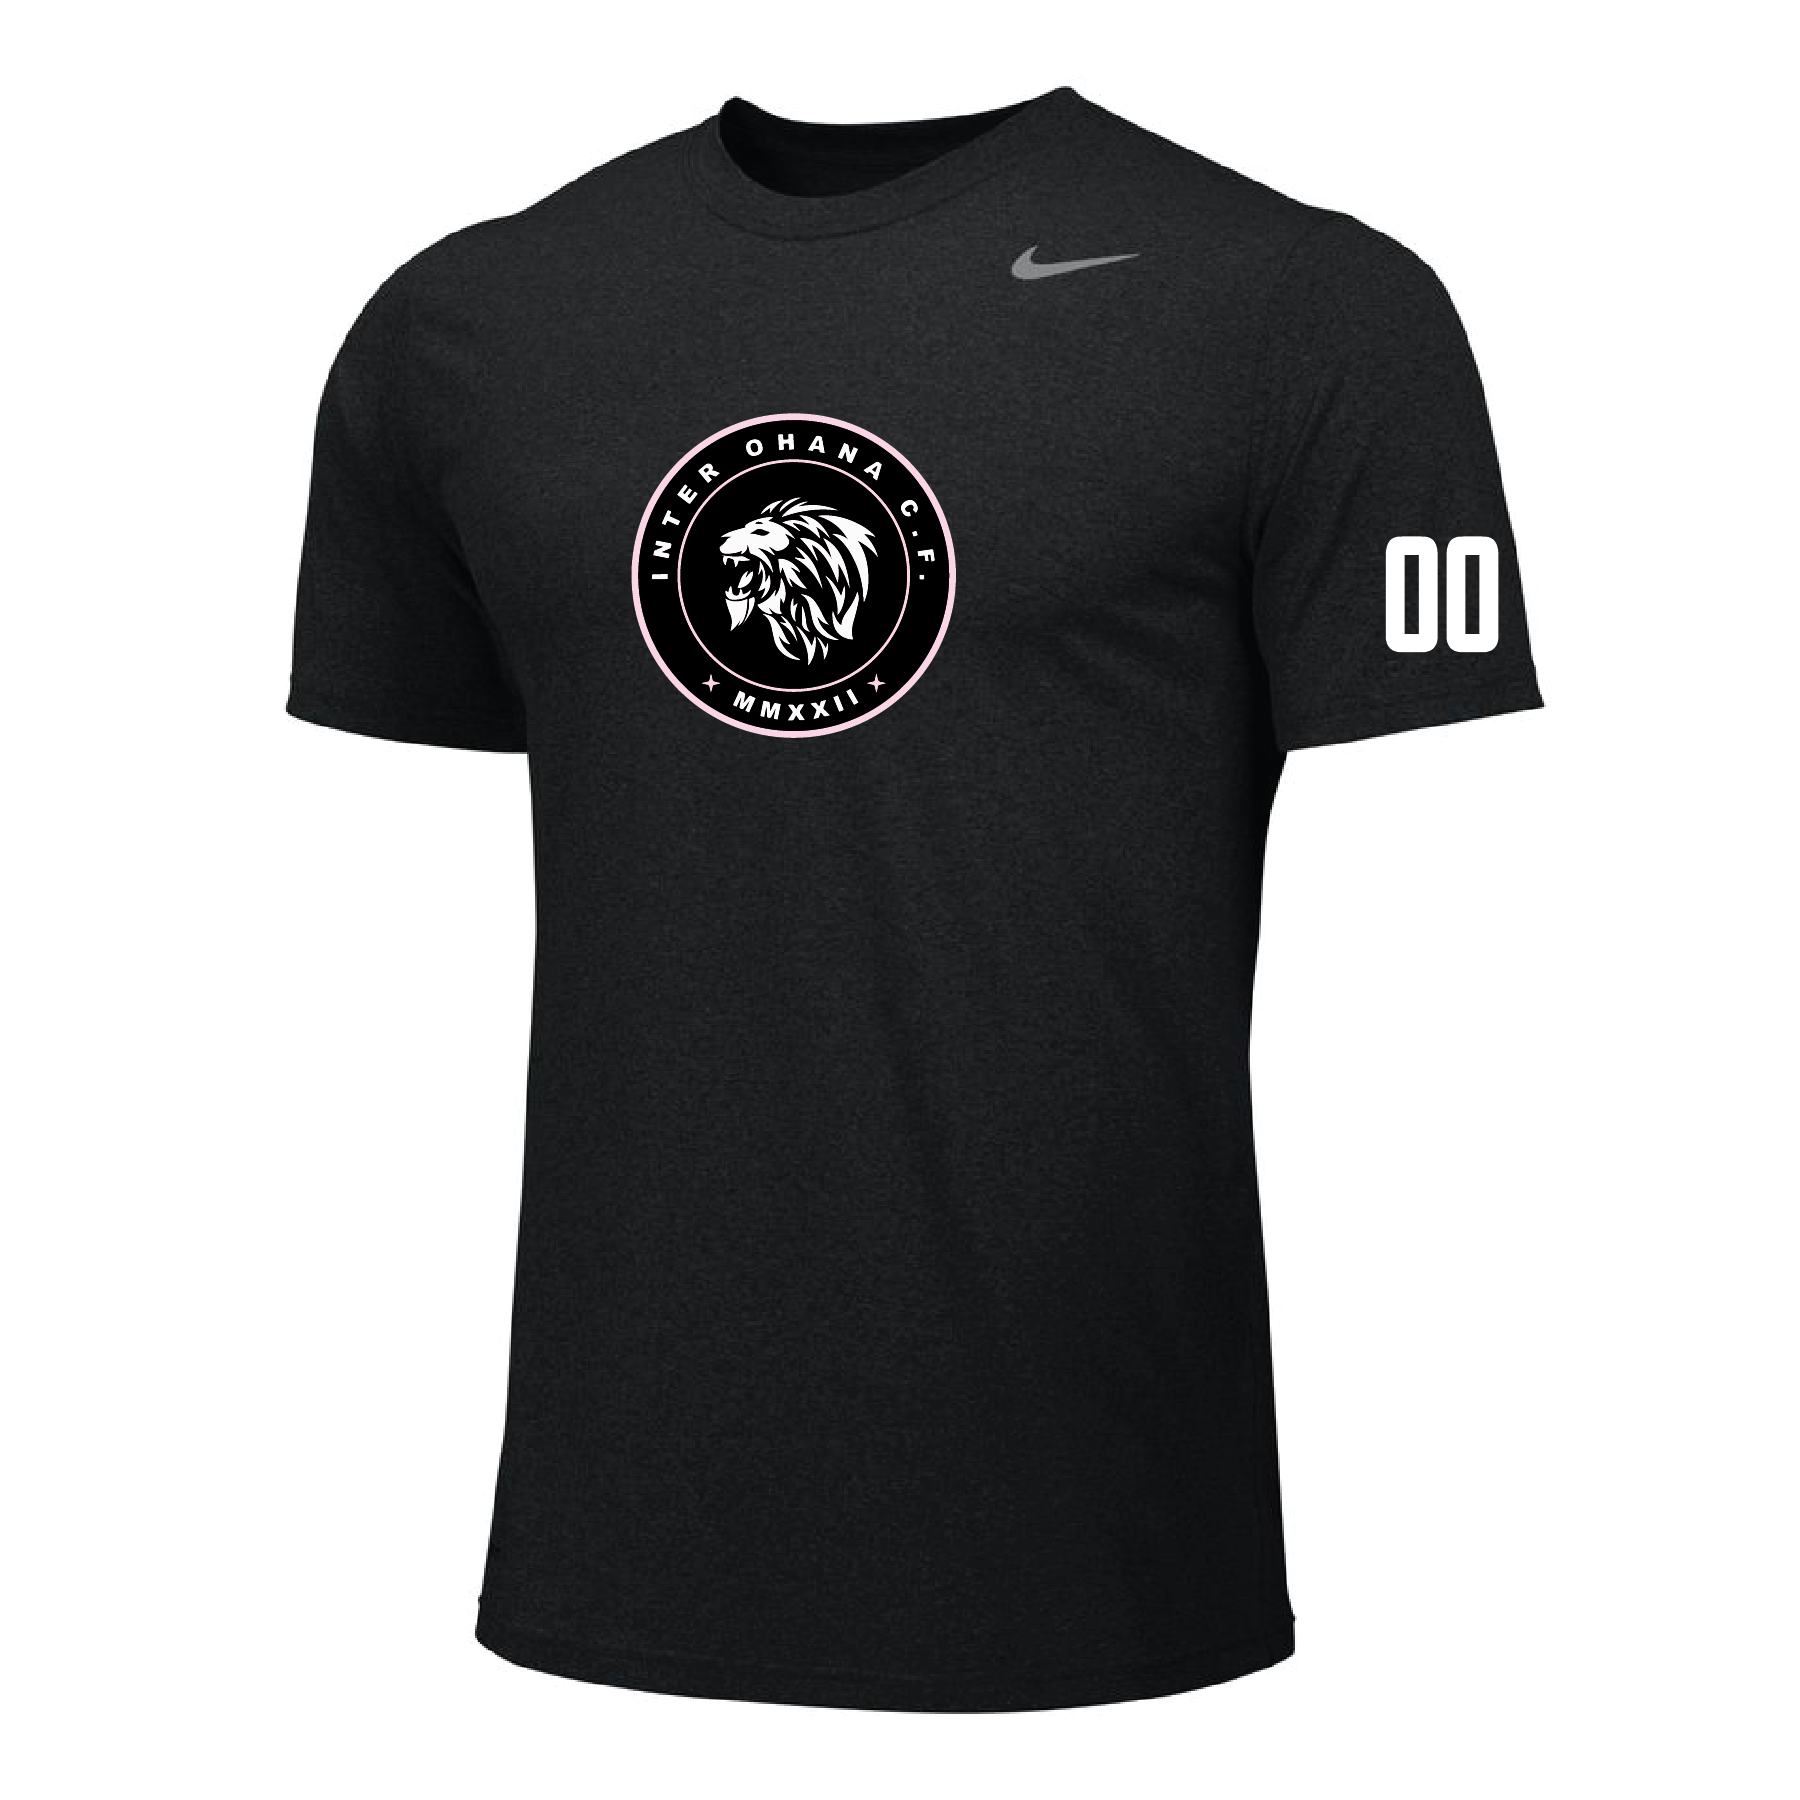 Inter Ohana U7-U8 (Logo) Nike Legend SS Shirt Black – Soccer Zone USA